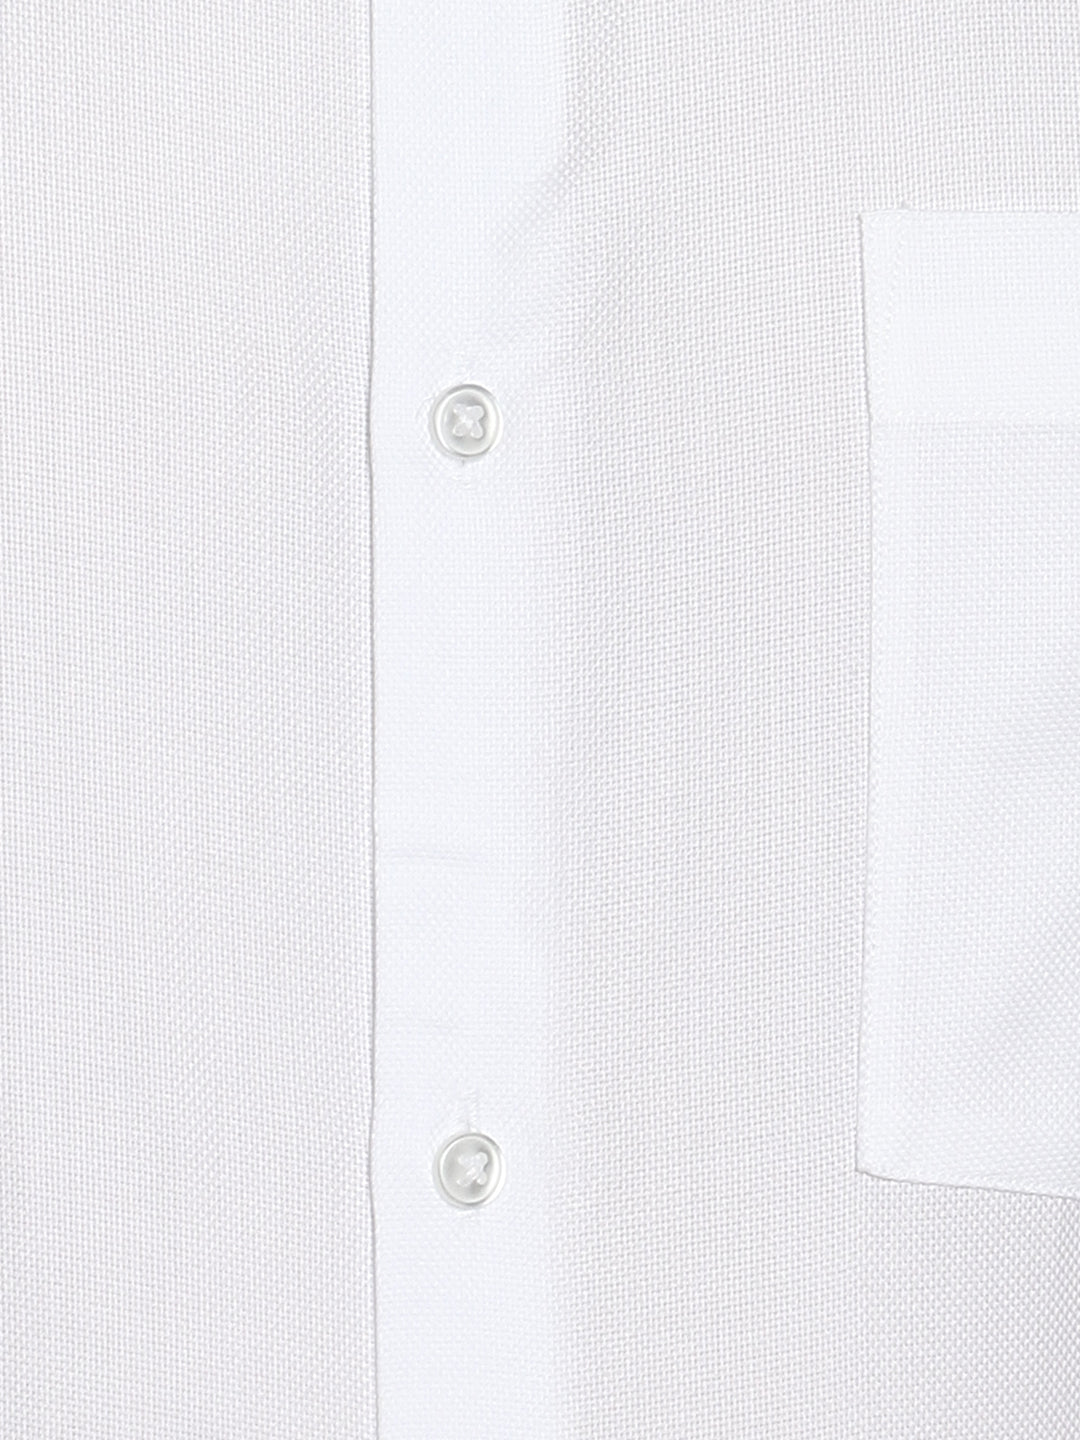 White Cotton Solid Slim Fit Shirt